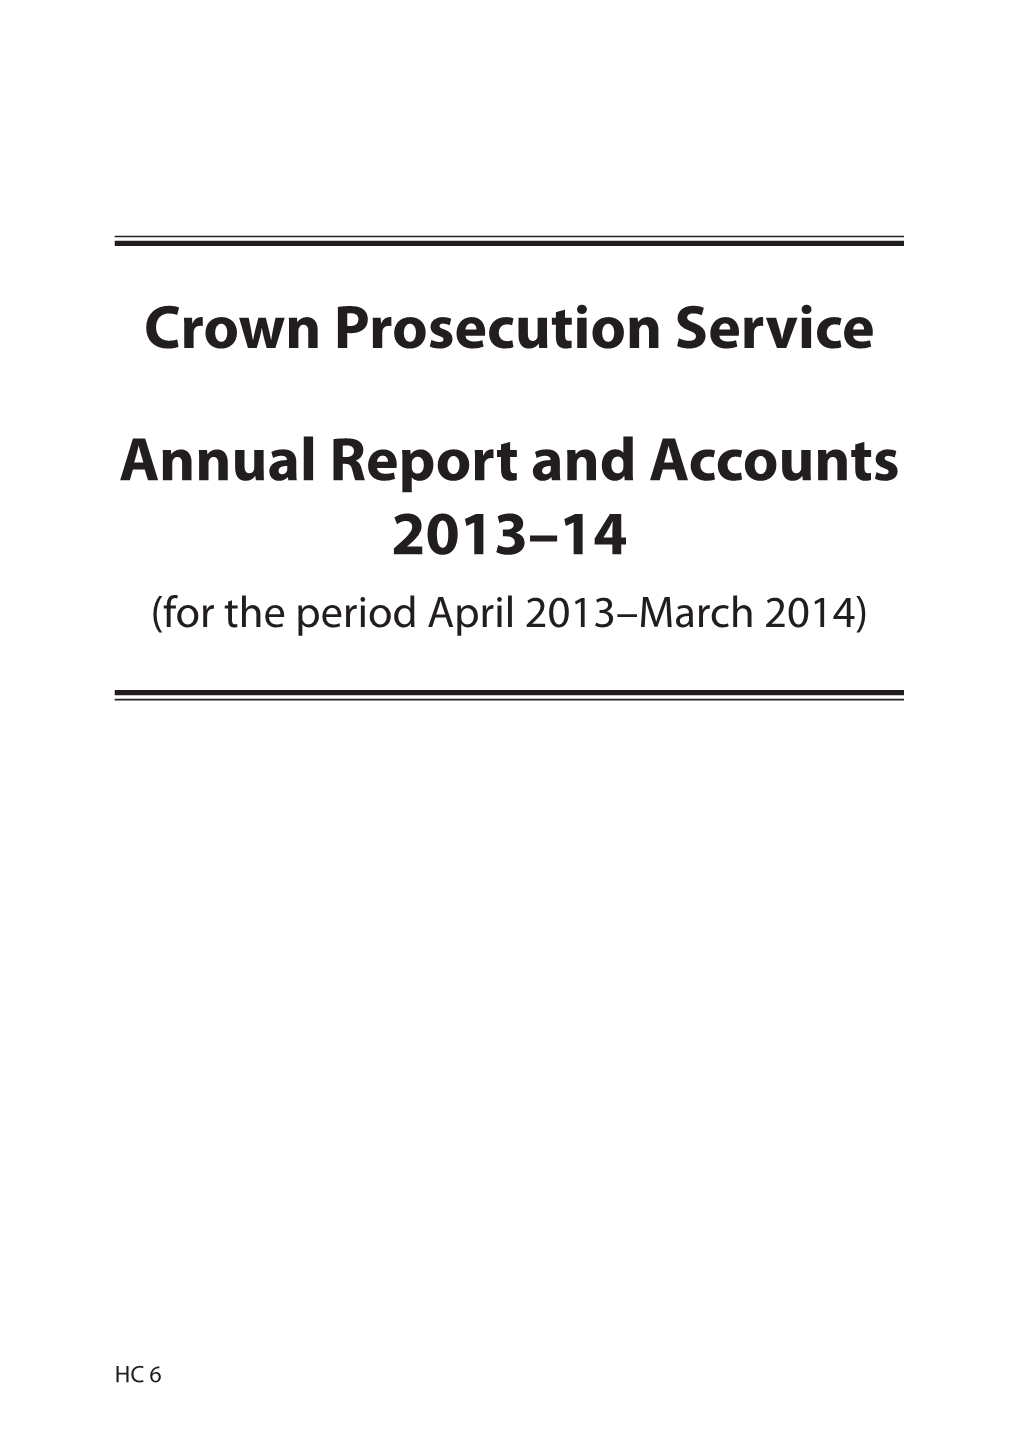 HC 6 Crown Prosecution Service